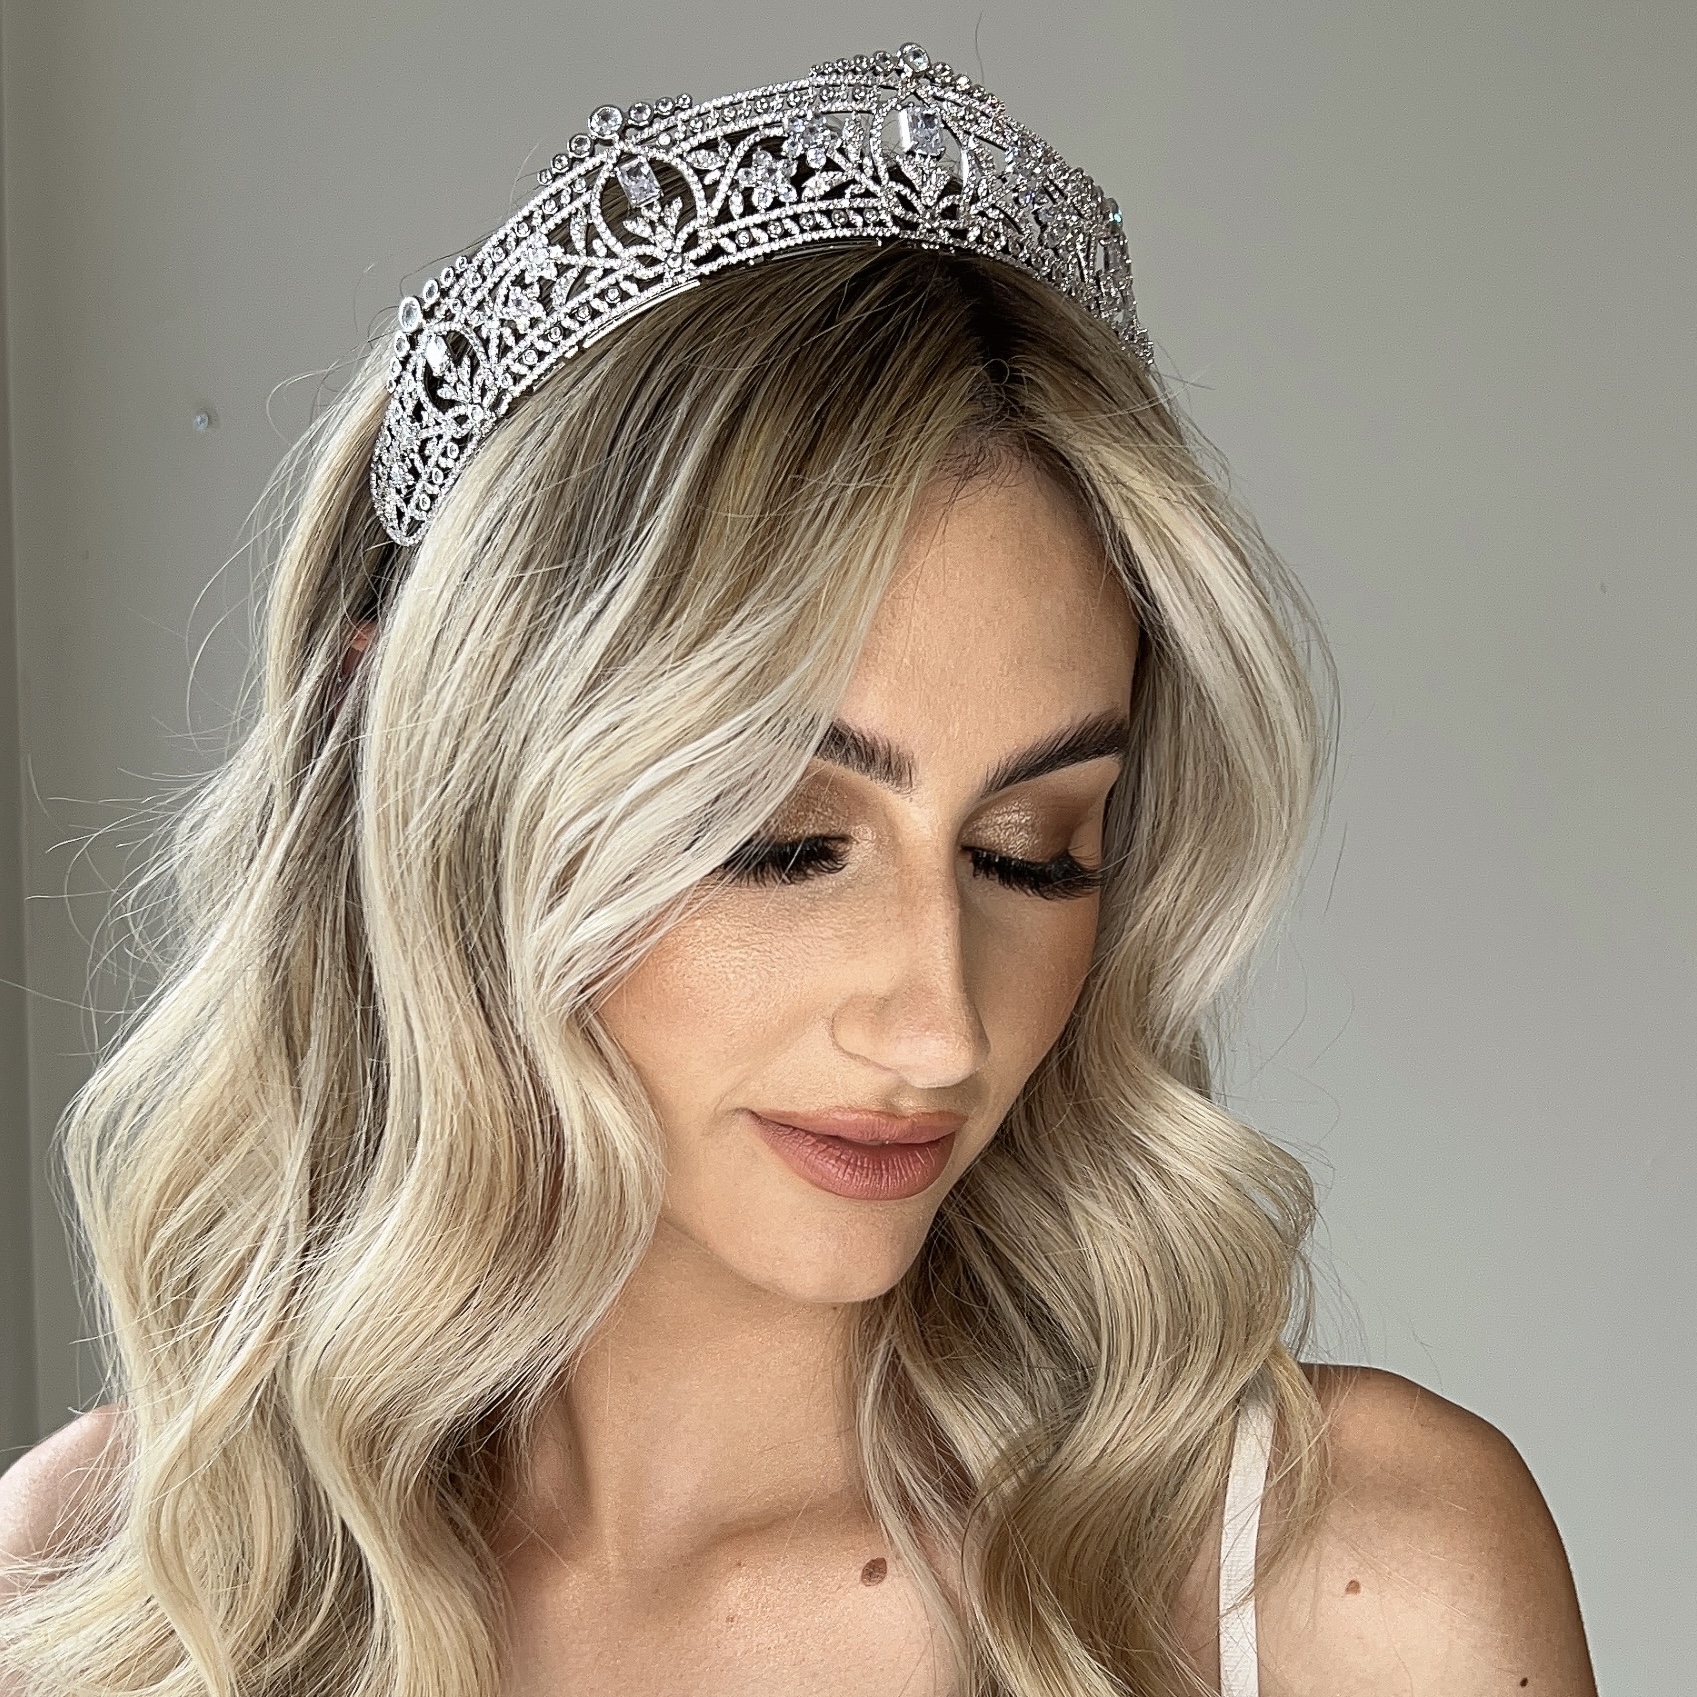 Princess Wedding Crown|Annaliese|Jeanette Maree|